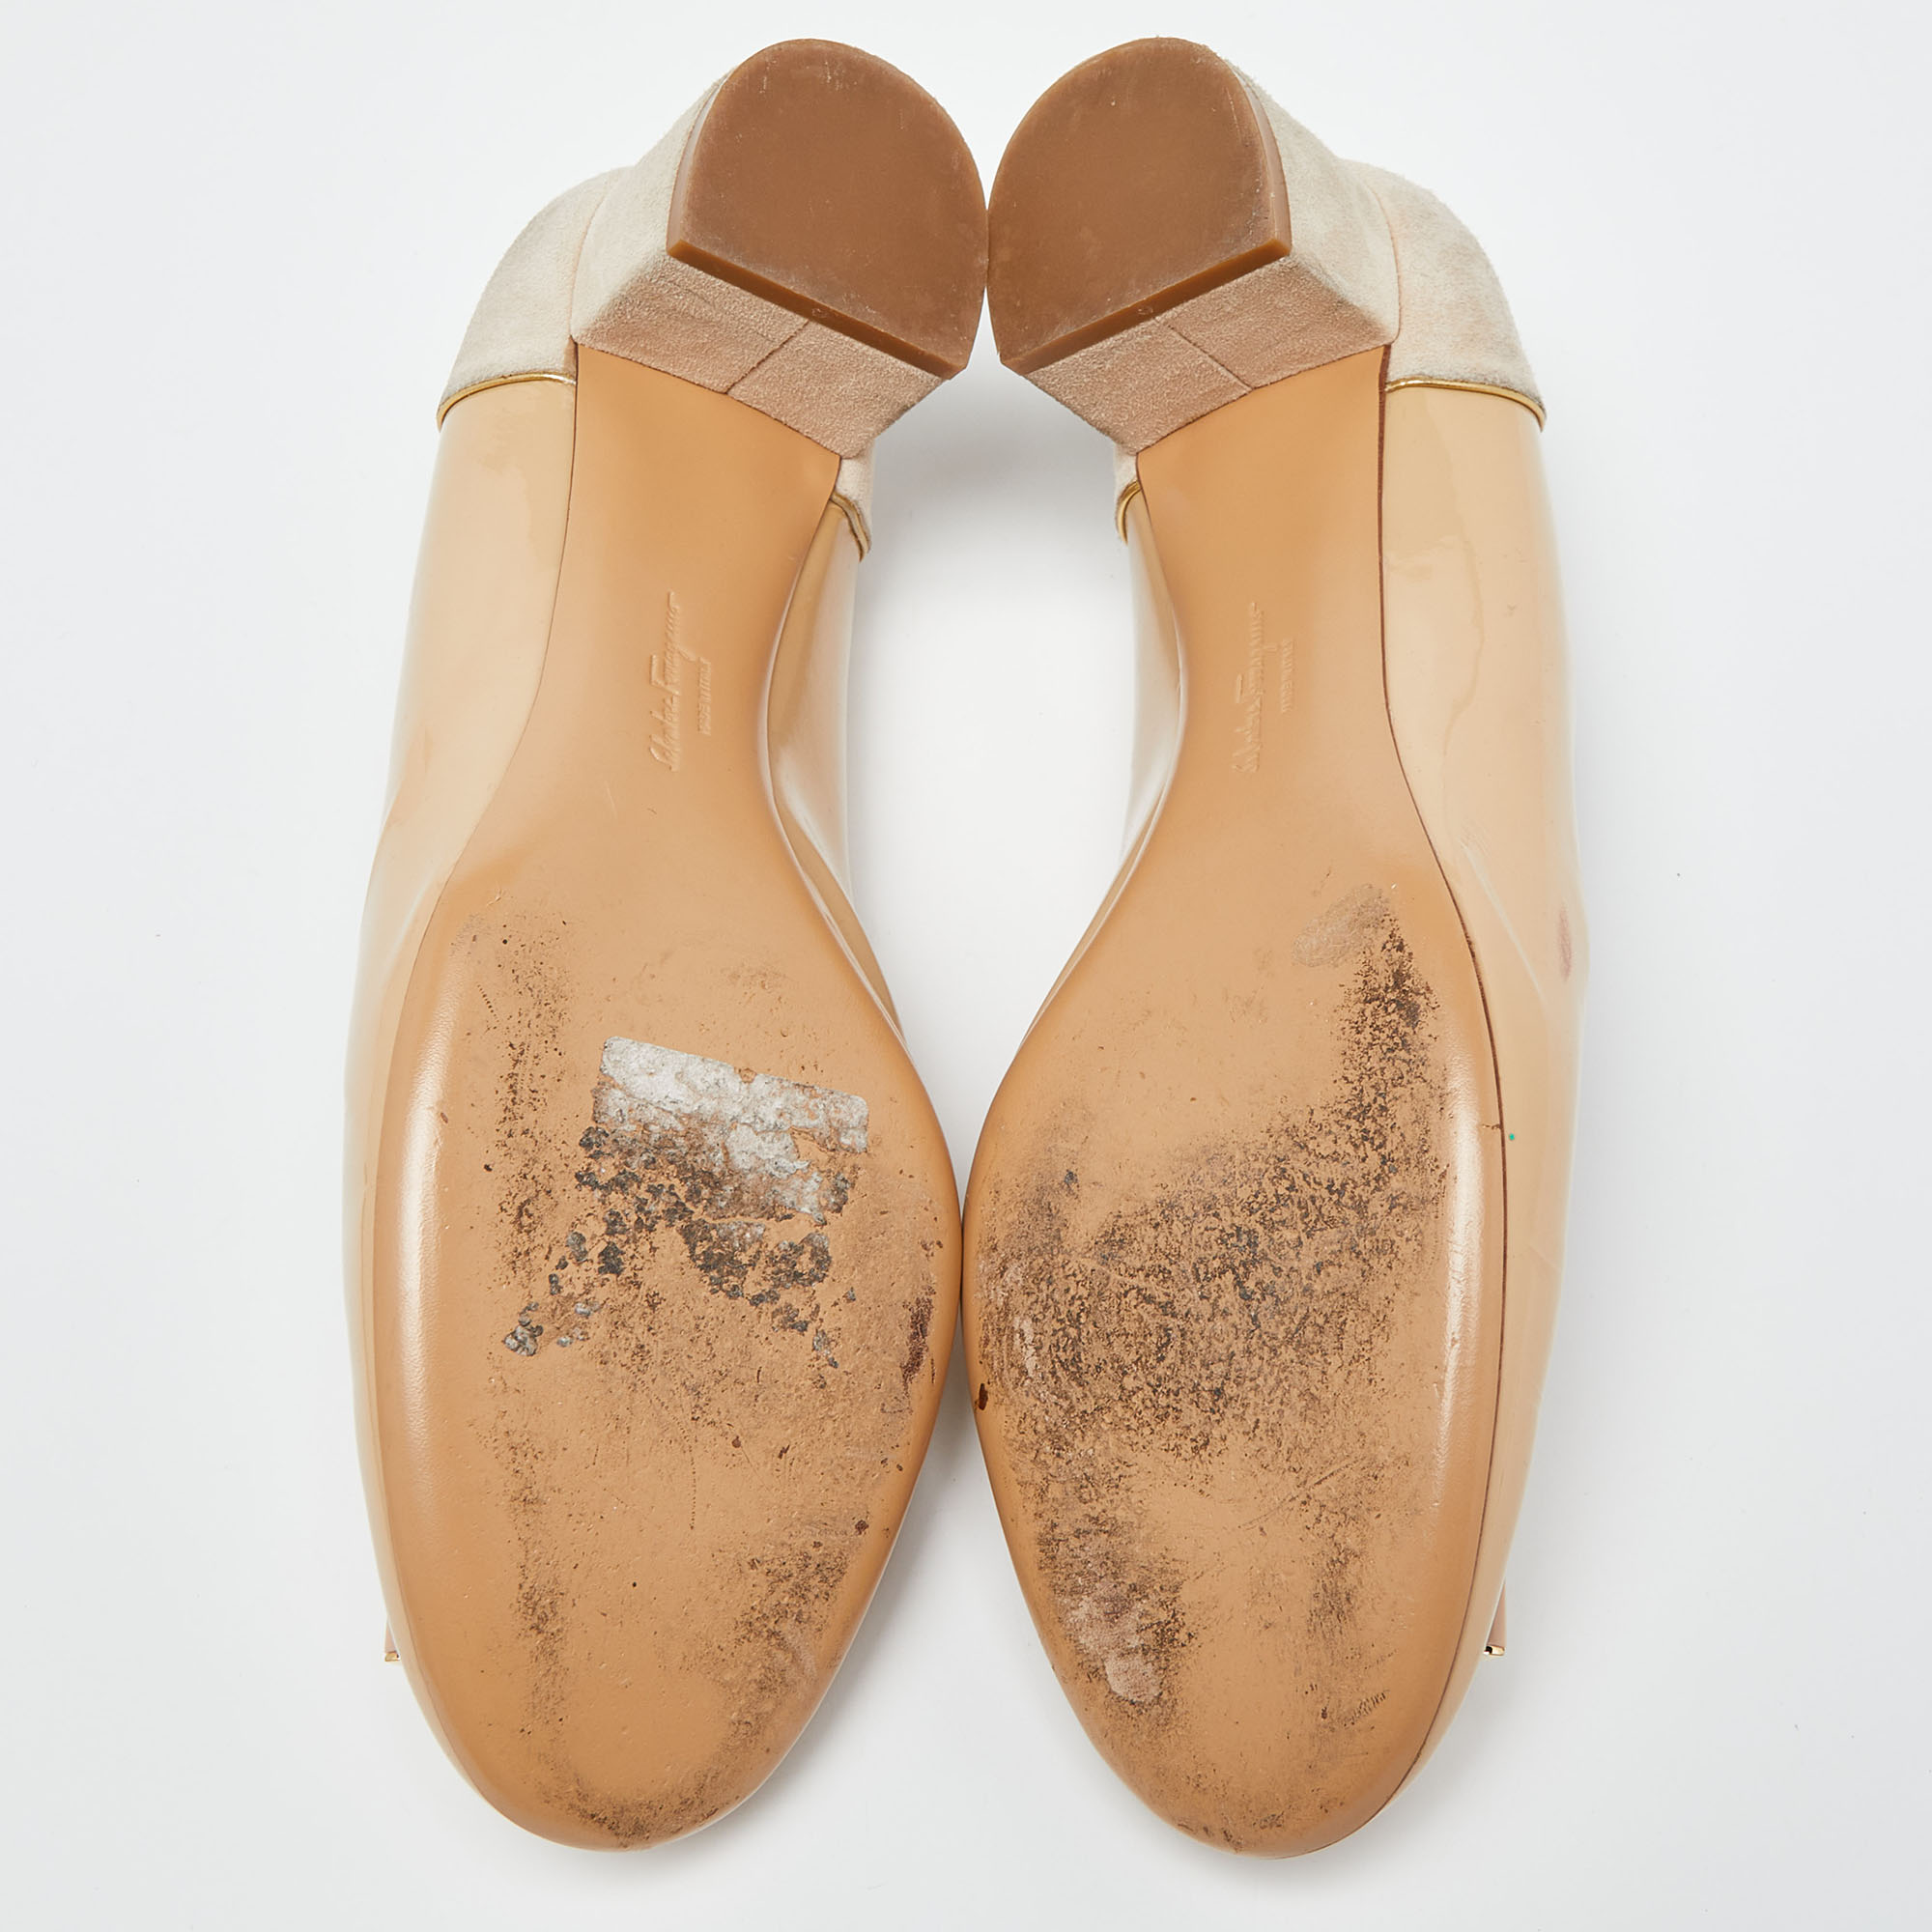 Salvatore Ferragamo Beige Patent Leather And Suede Block Heel Bow Pumps Size 40.5